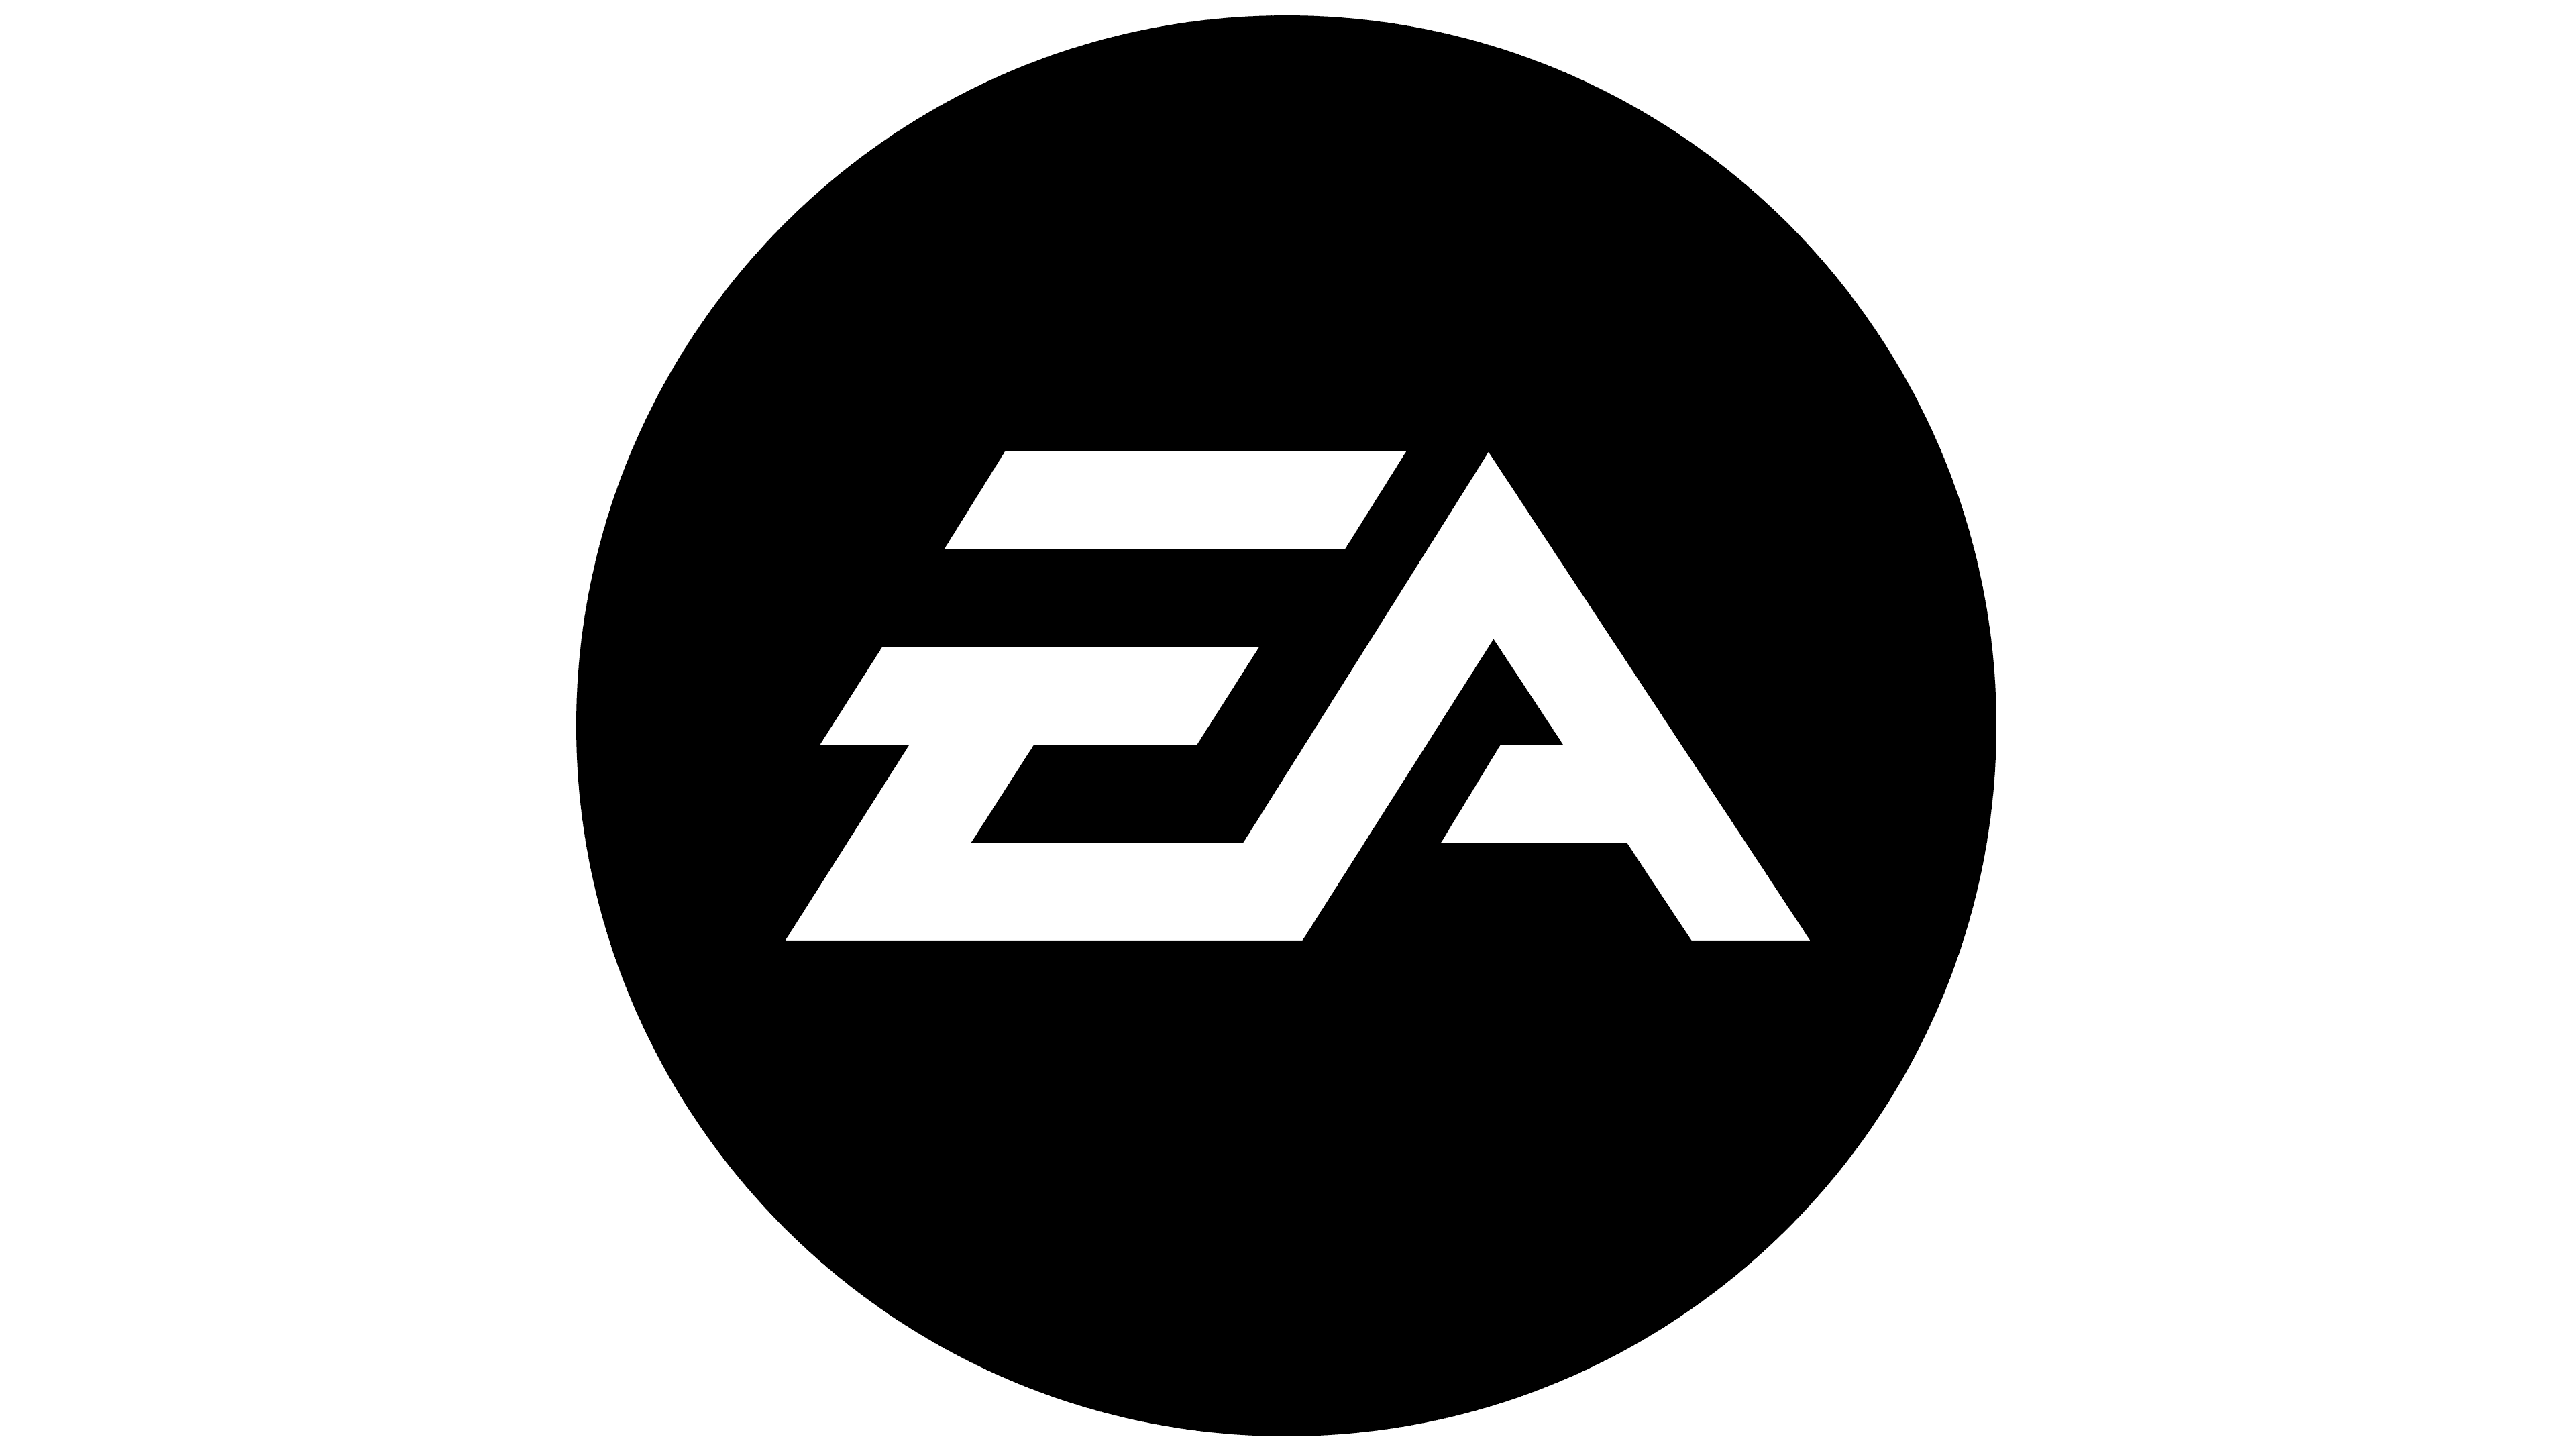 Electronic Arts, a powerhouse among top global video game companies